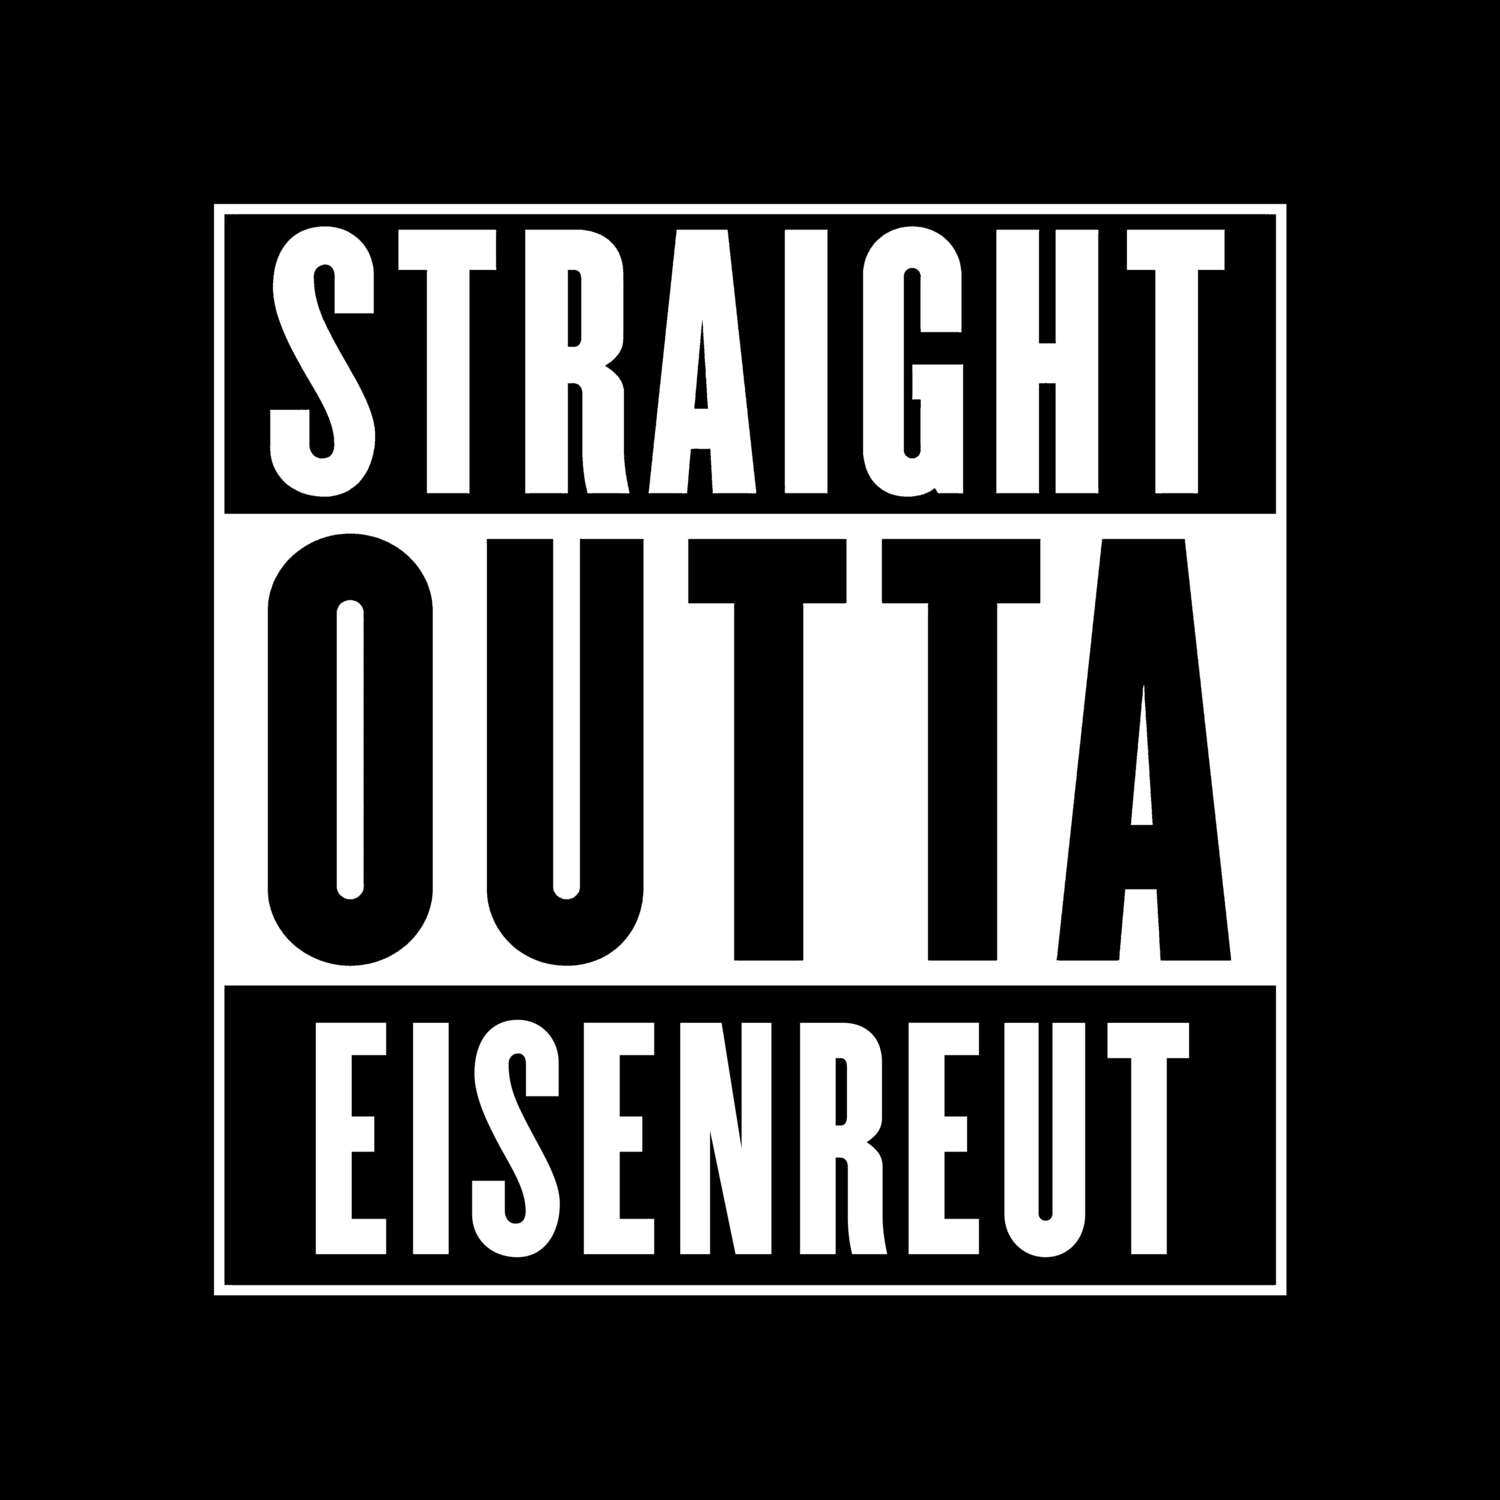 Eisenreut T-Shirt »Straight Outta«